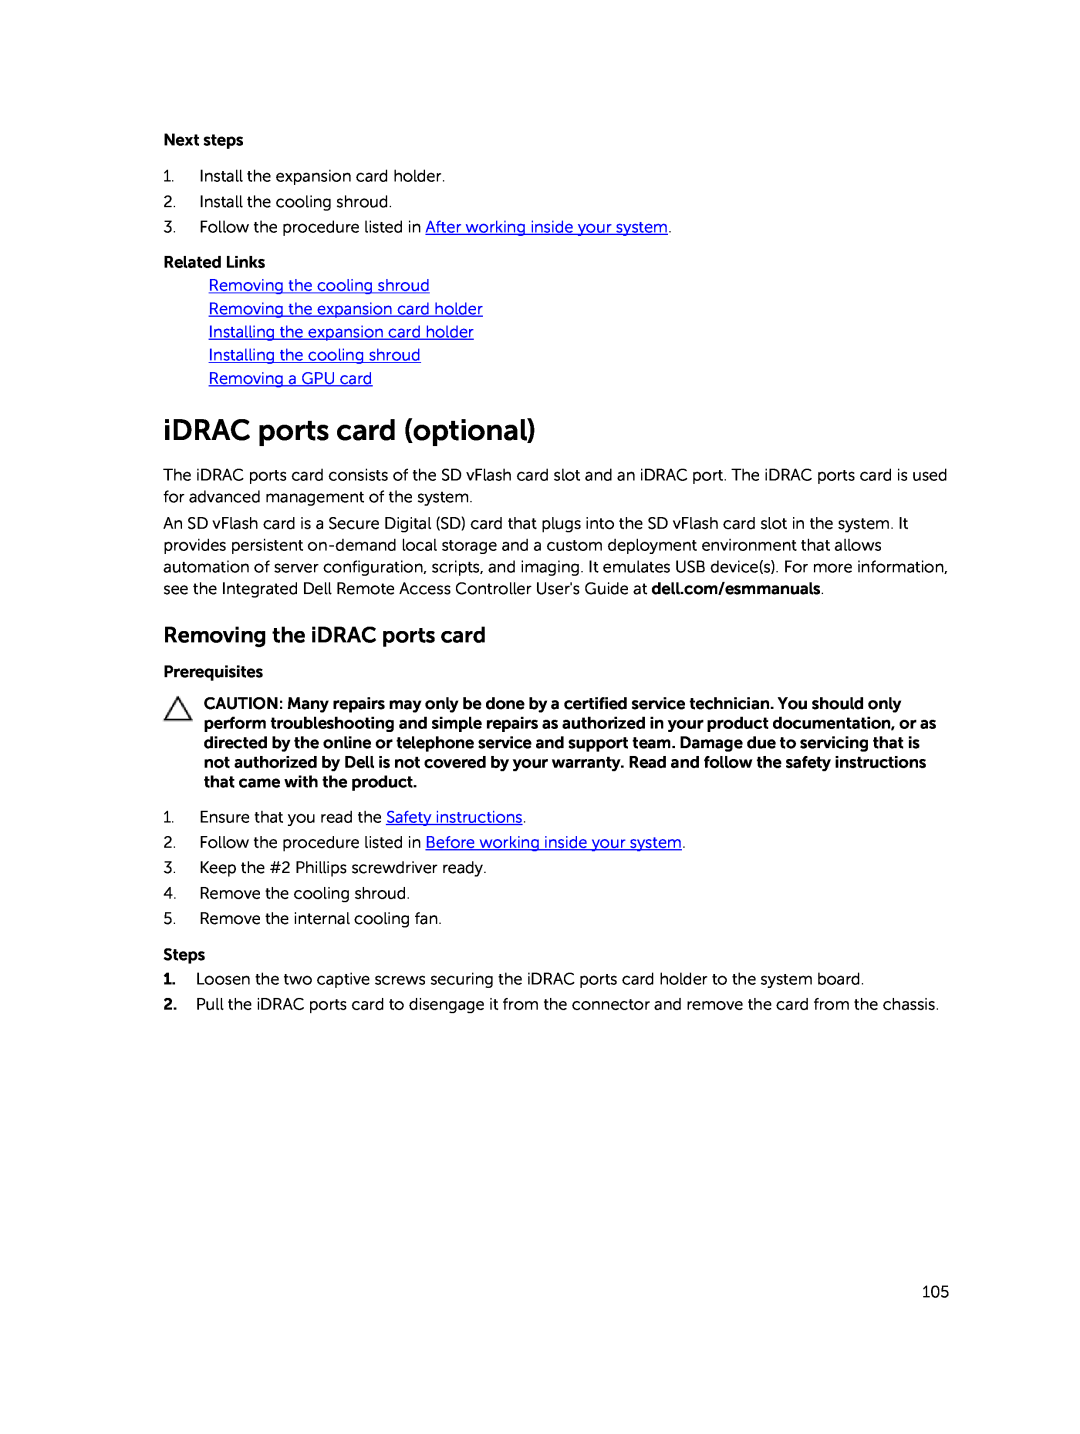 Dell E30S owner manual iDRAC ports card optional, Removing the iDRAC ports card, Removing a GPU card 